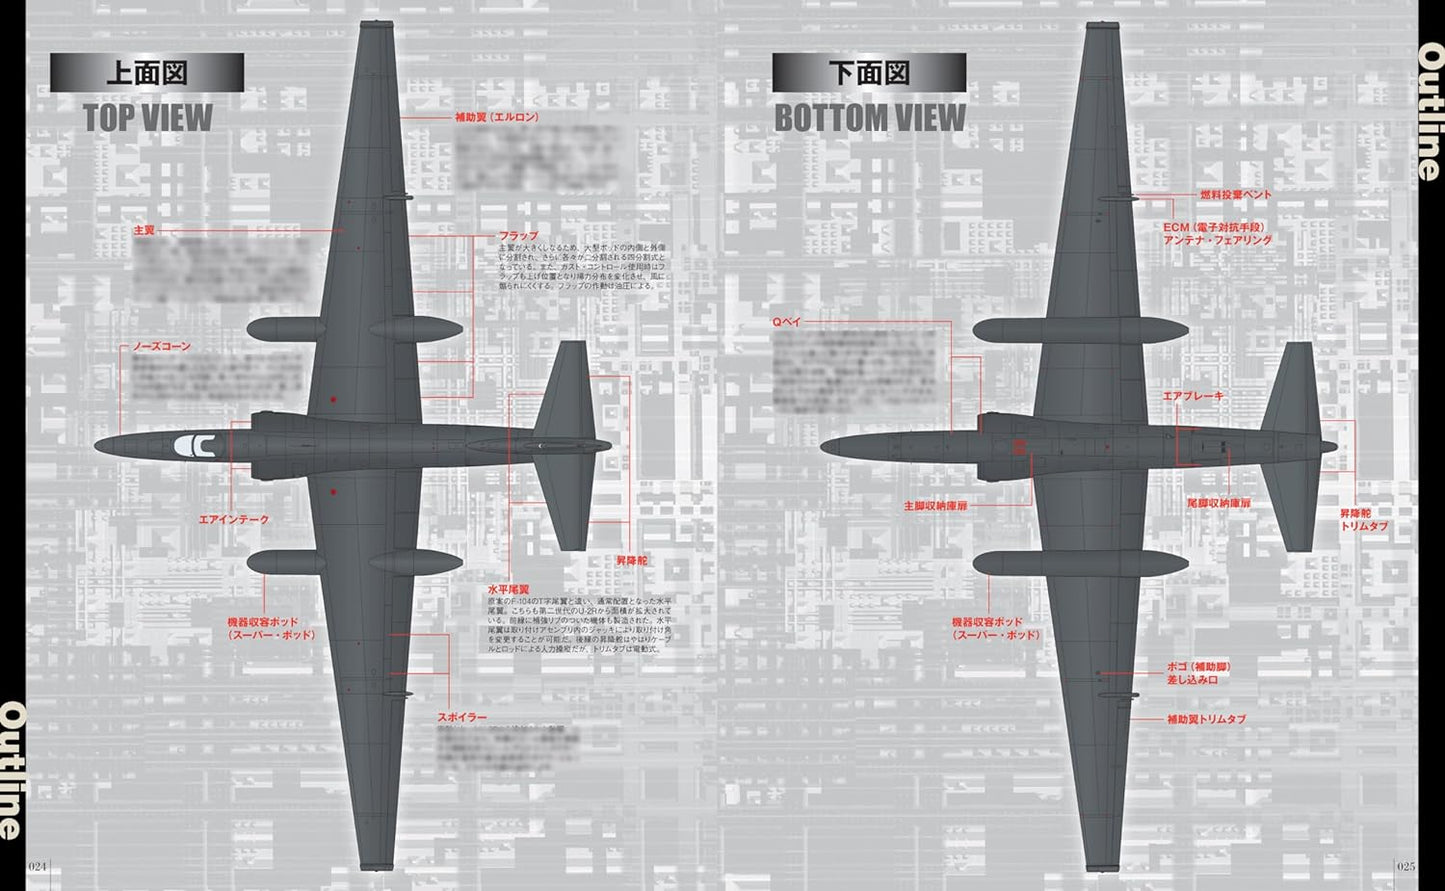 U-2 Dragon Lady Military Aircraft of the World